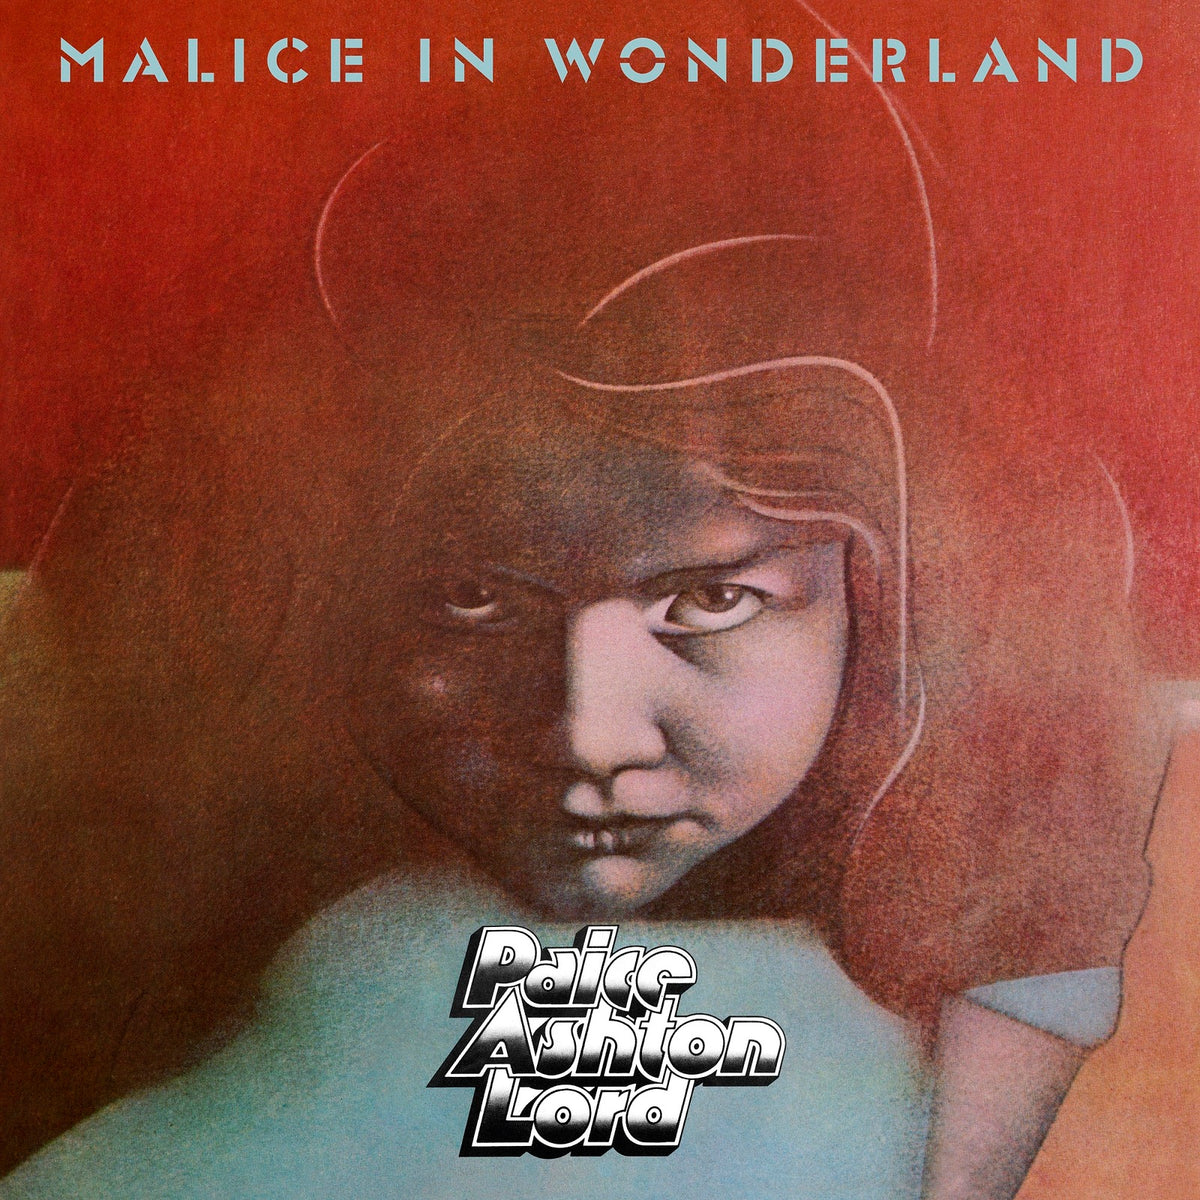 Paice Ashton Lord - Malice in Wonderland - 0219331EMU